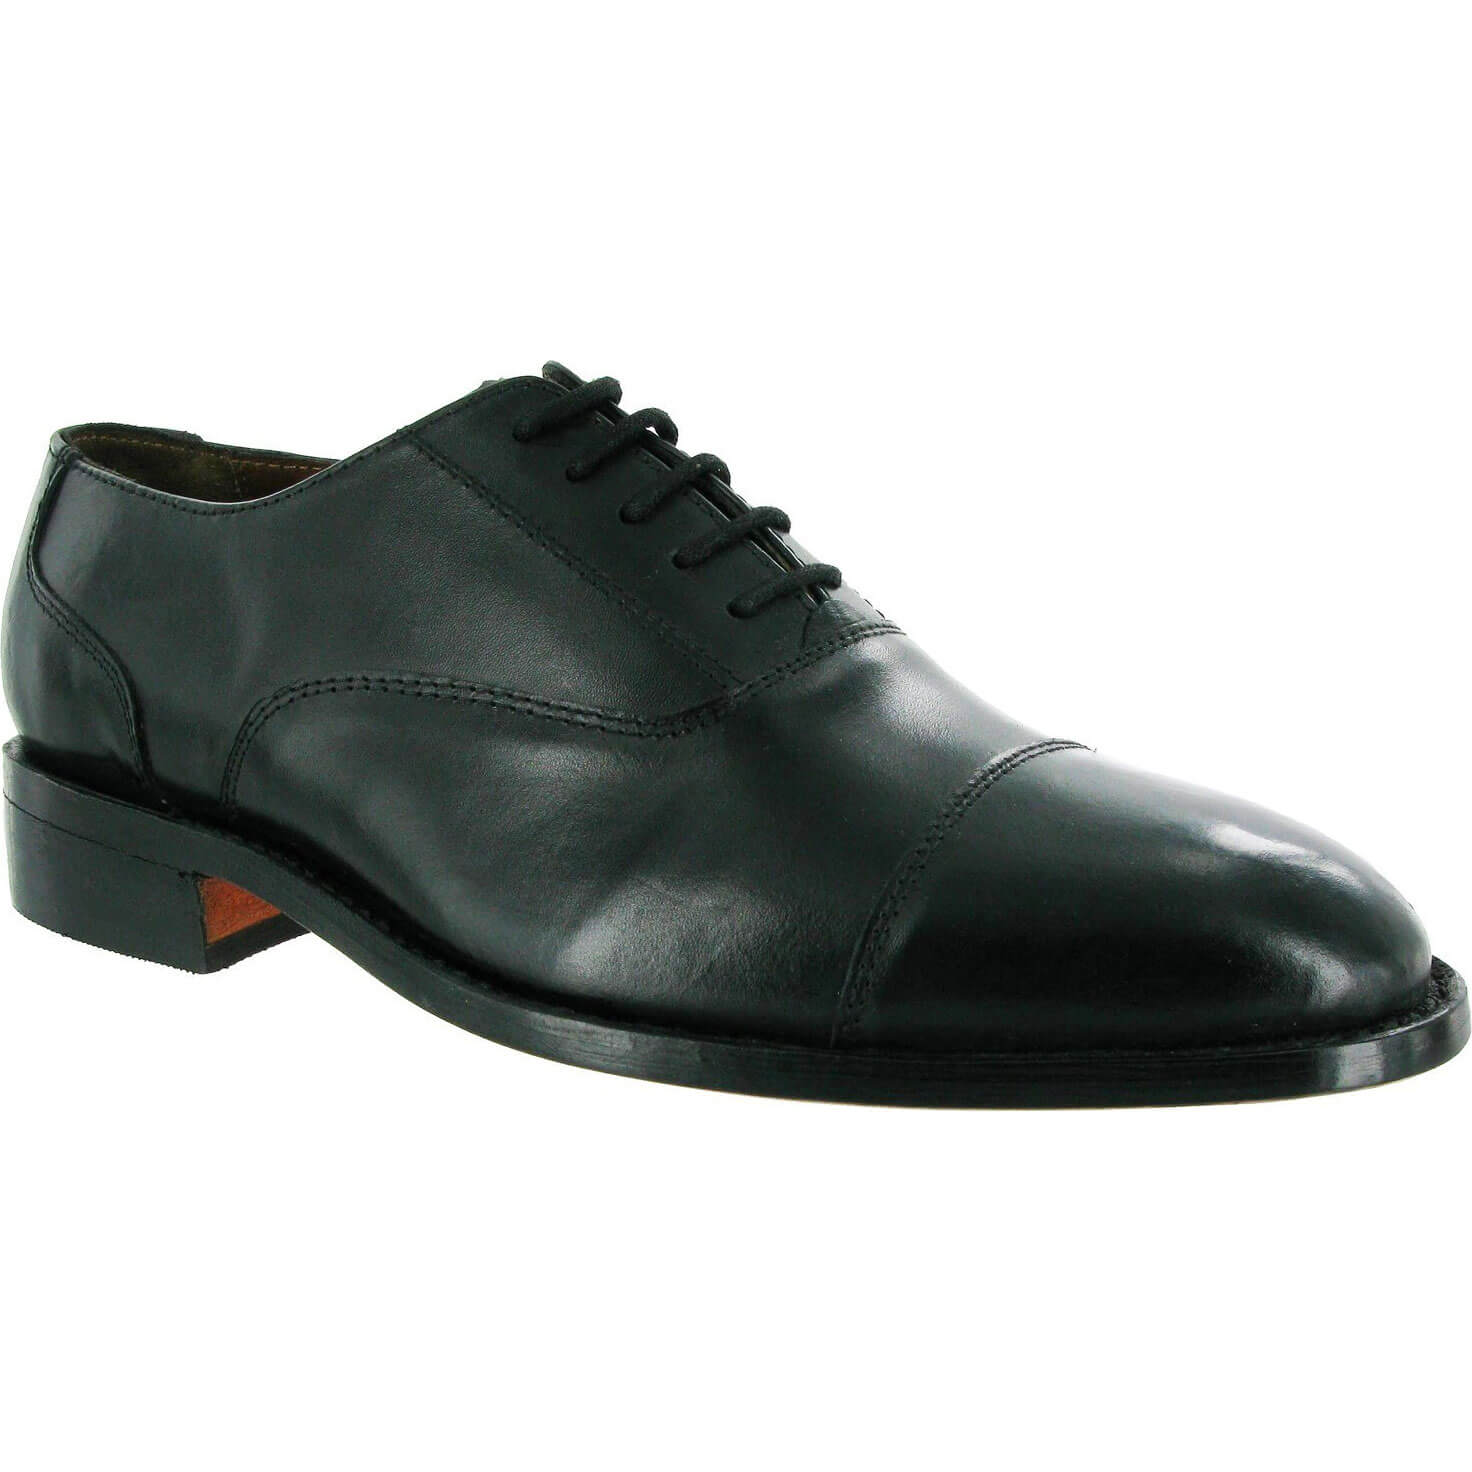 Image of Amblers James Leather Soled Oxford Dress Shoe Black Size 12